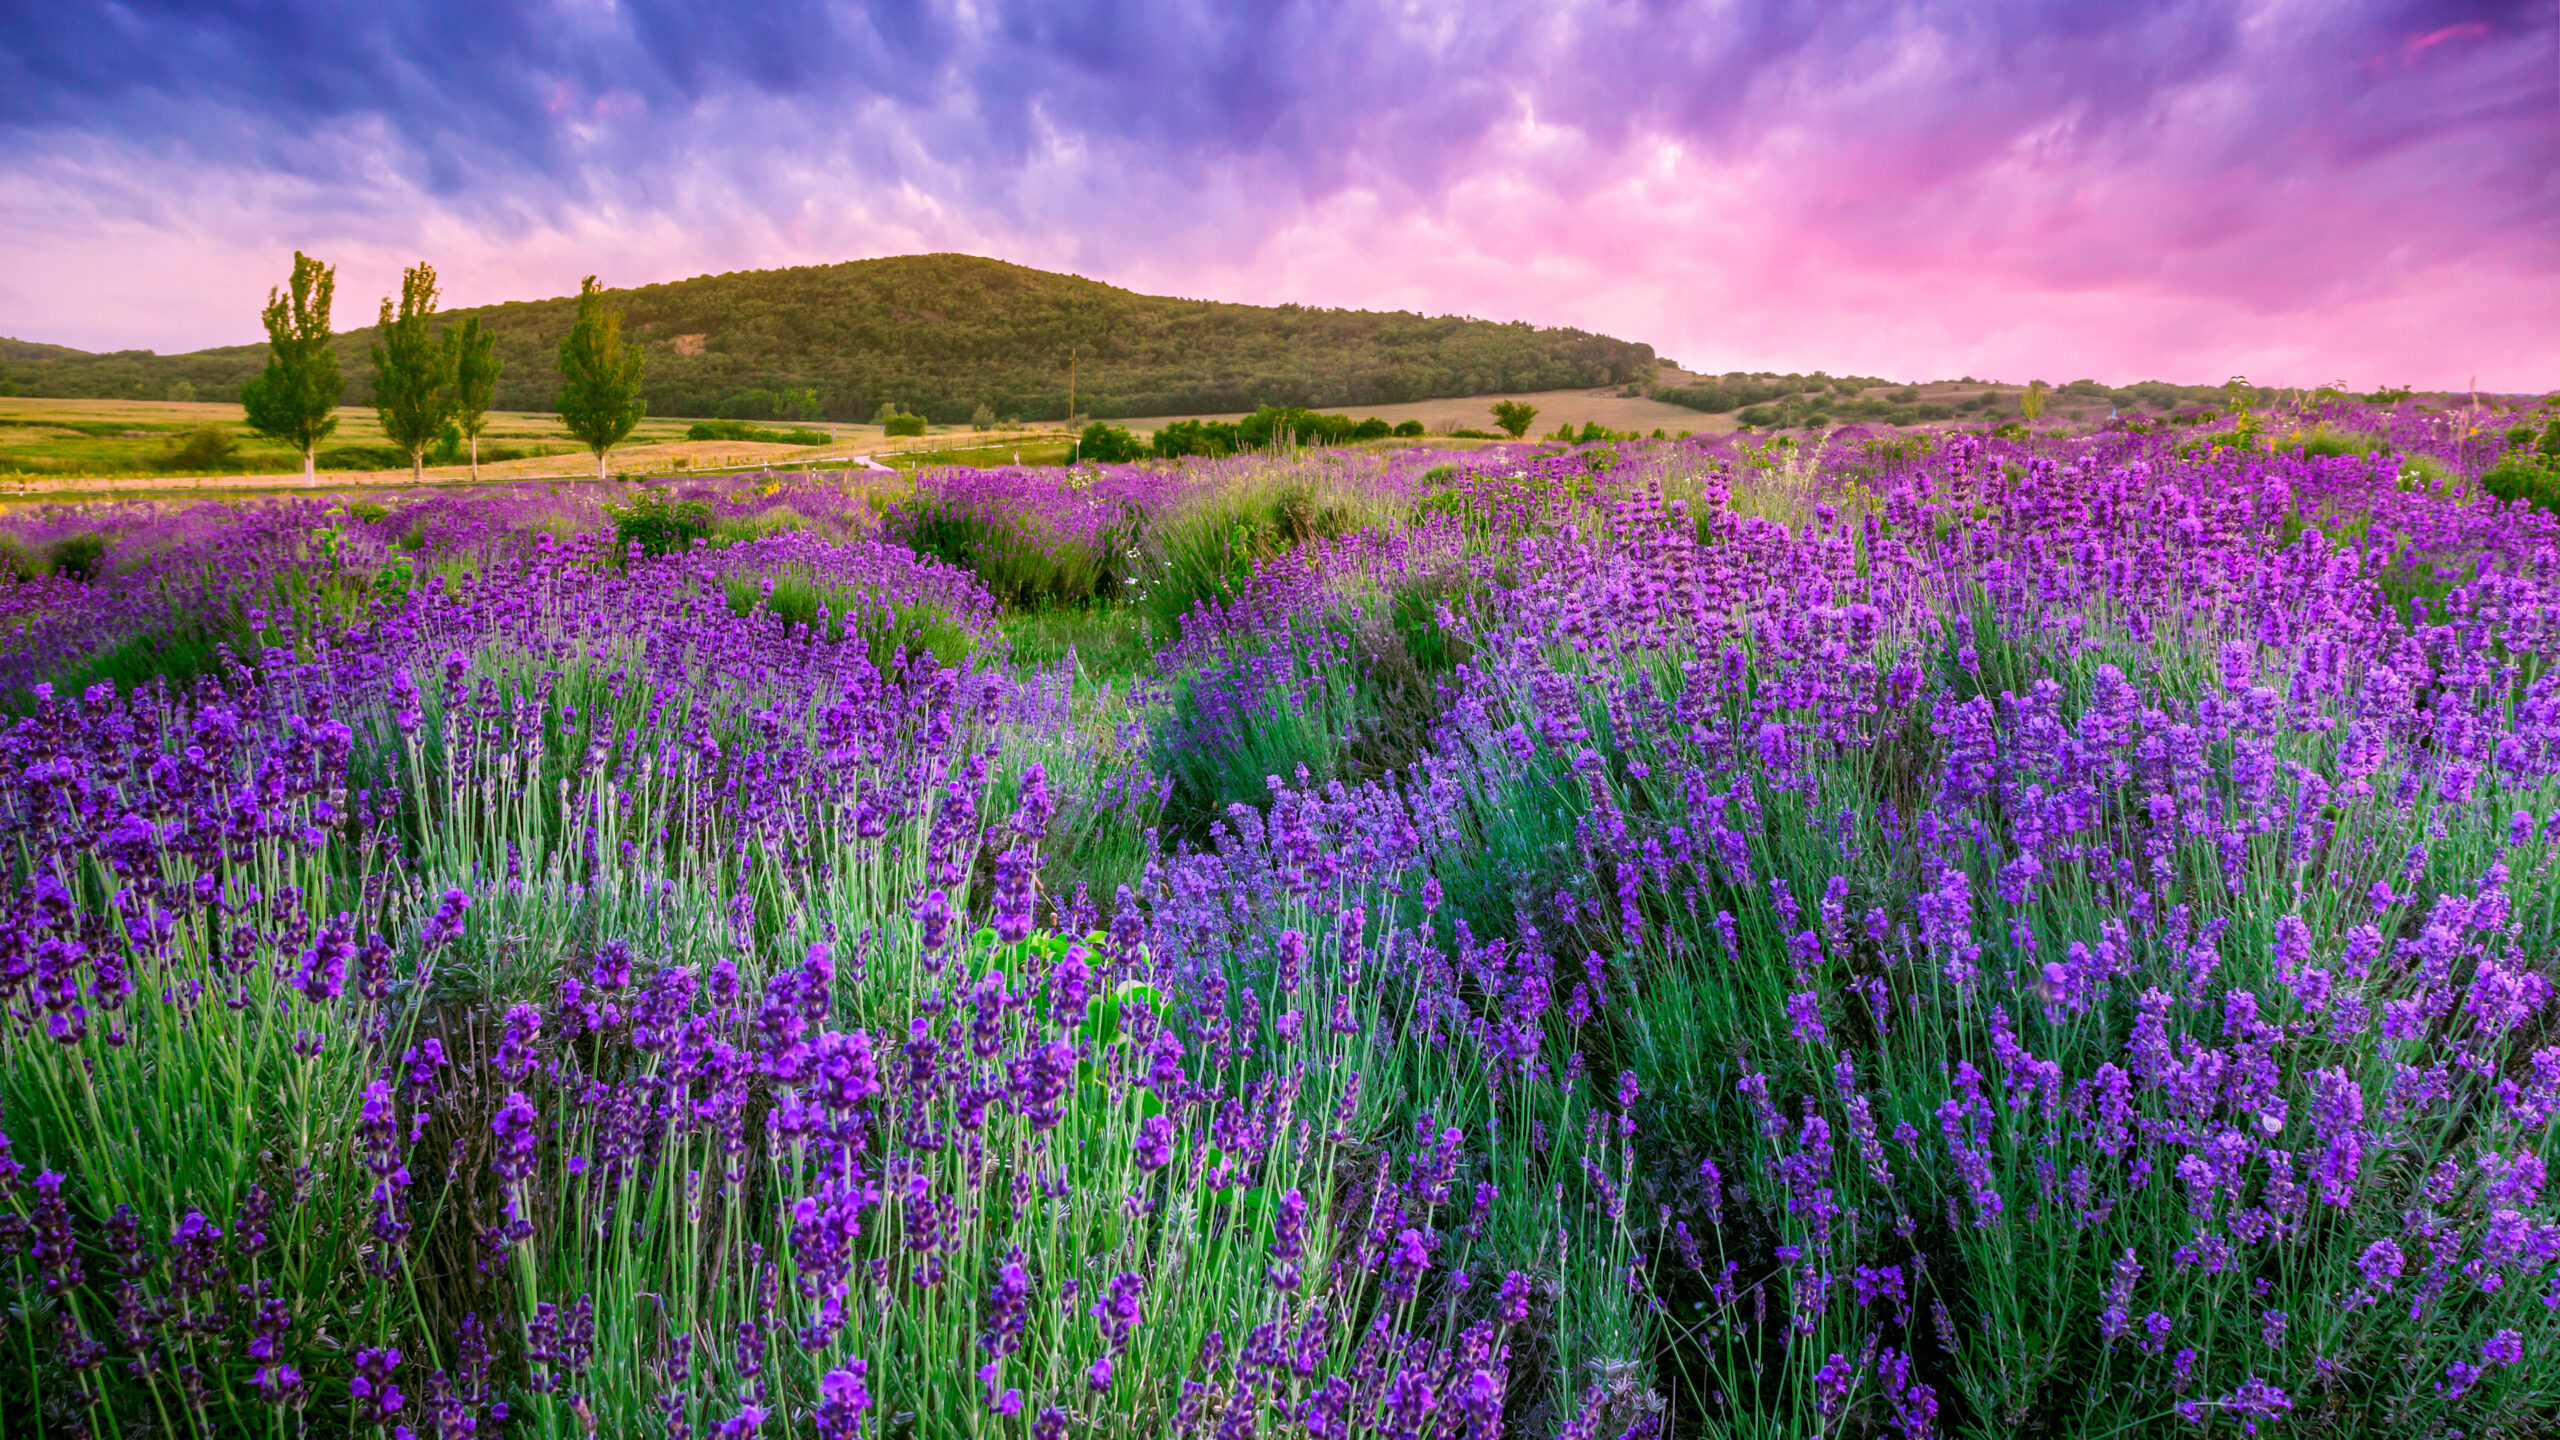 Lavender Flowers Field And Landscape Of Mountains In Light Pink Purple Clouds Sky Wallpaper K 2K Flowers